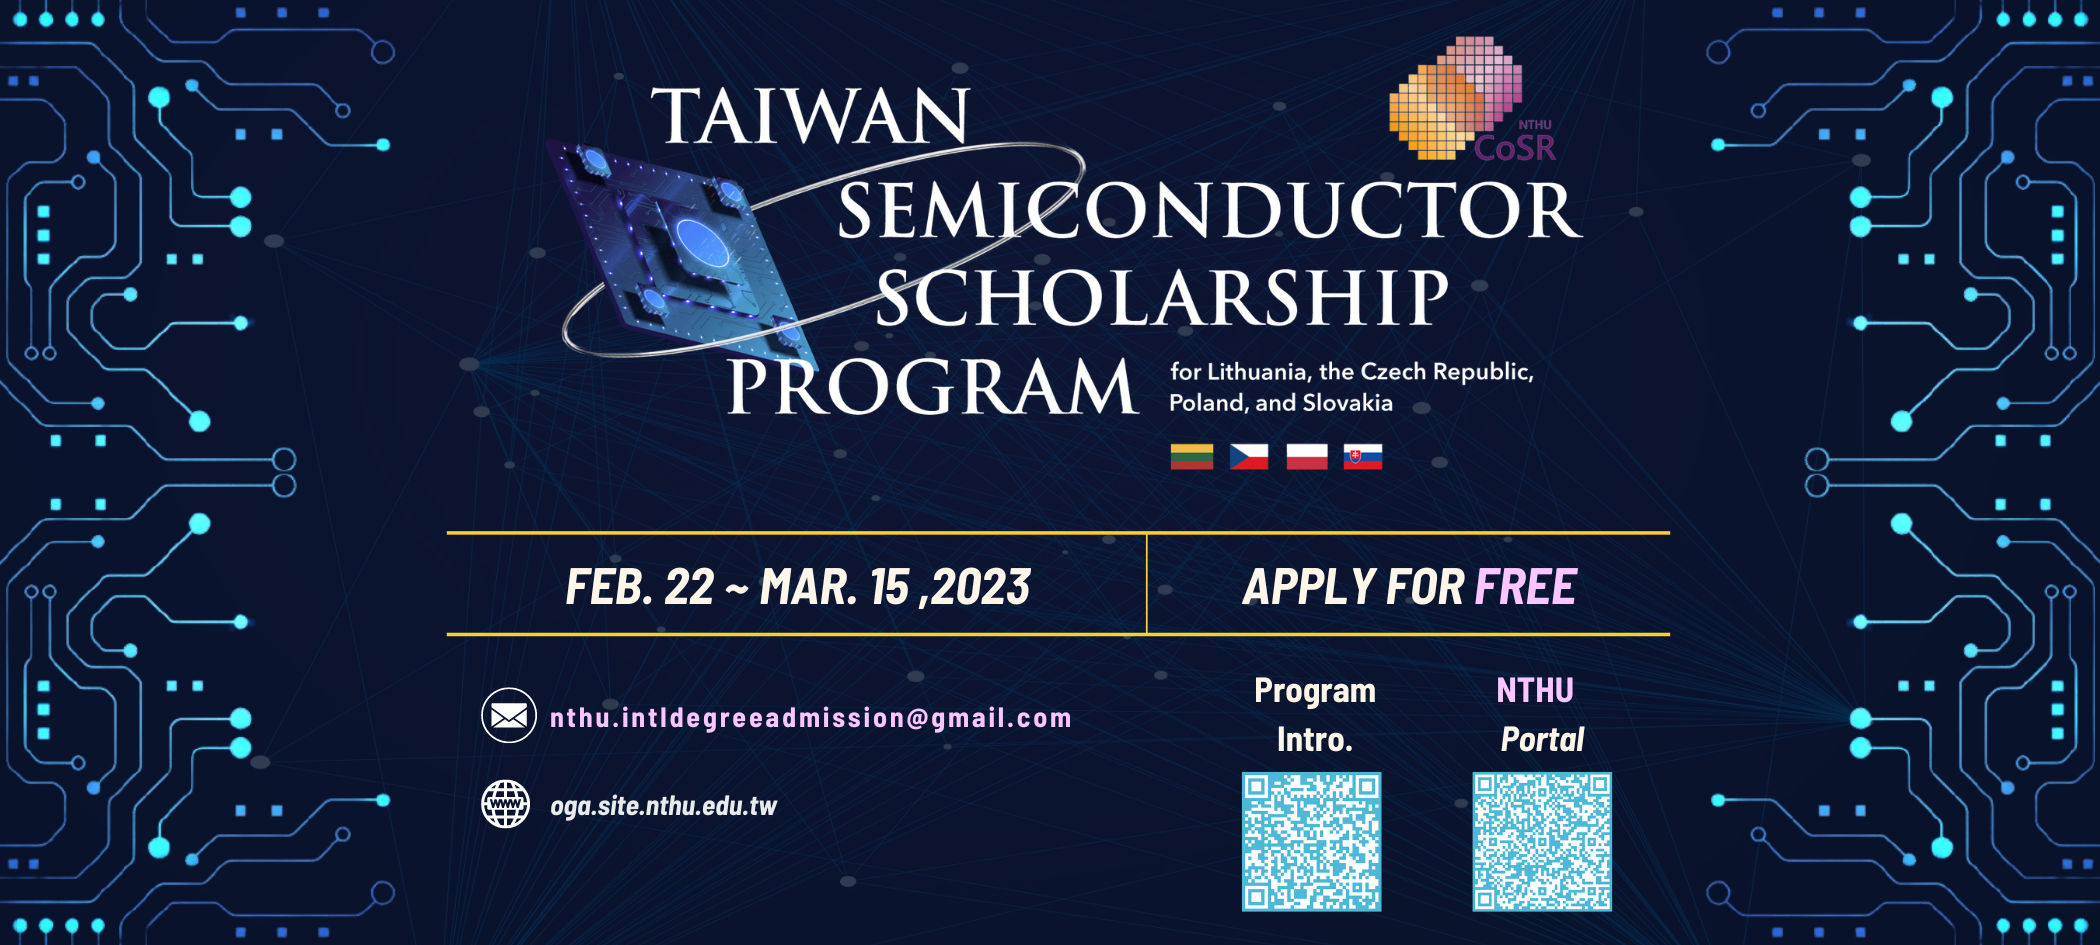 Taiwan Semiconductor Scholarship Program